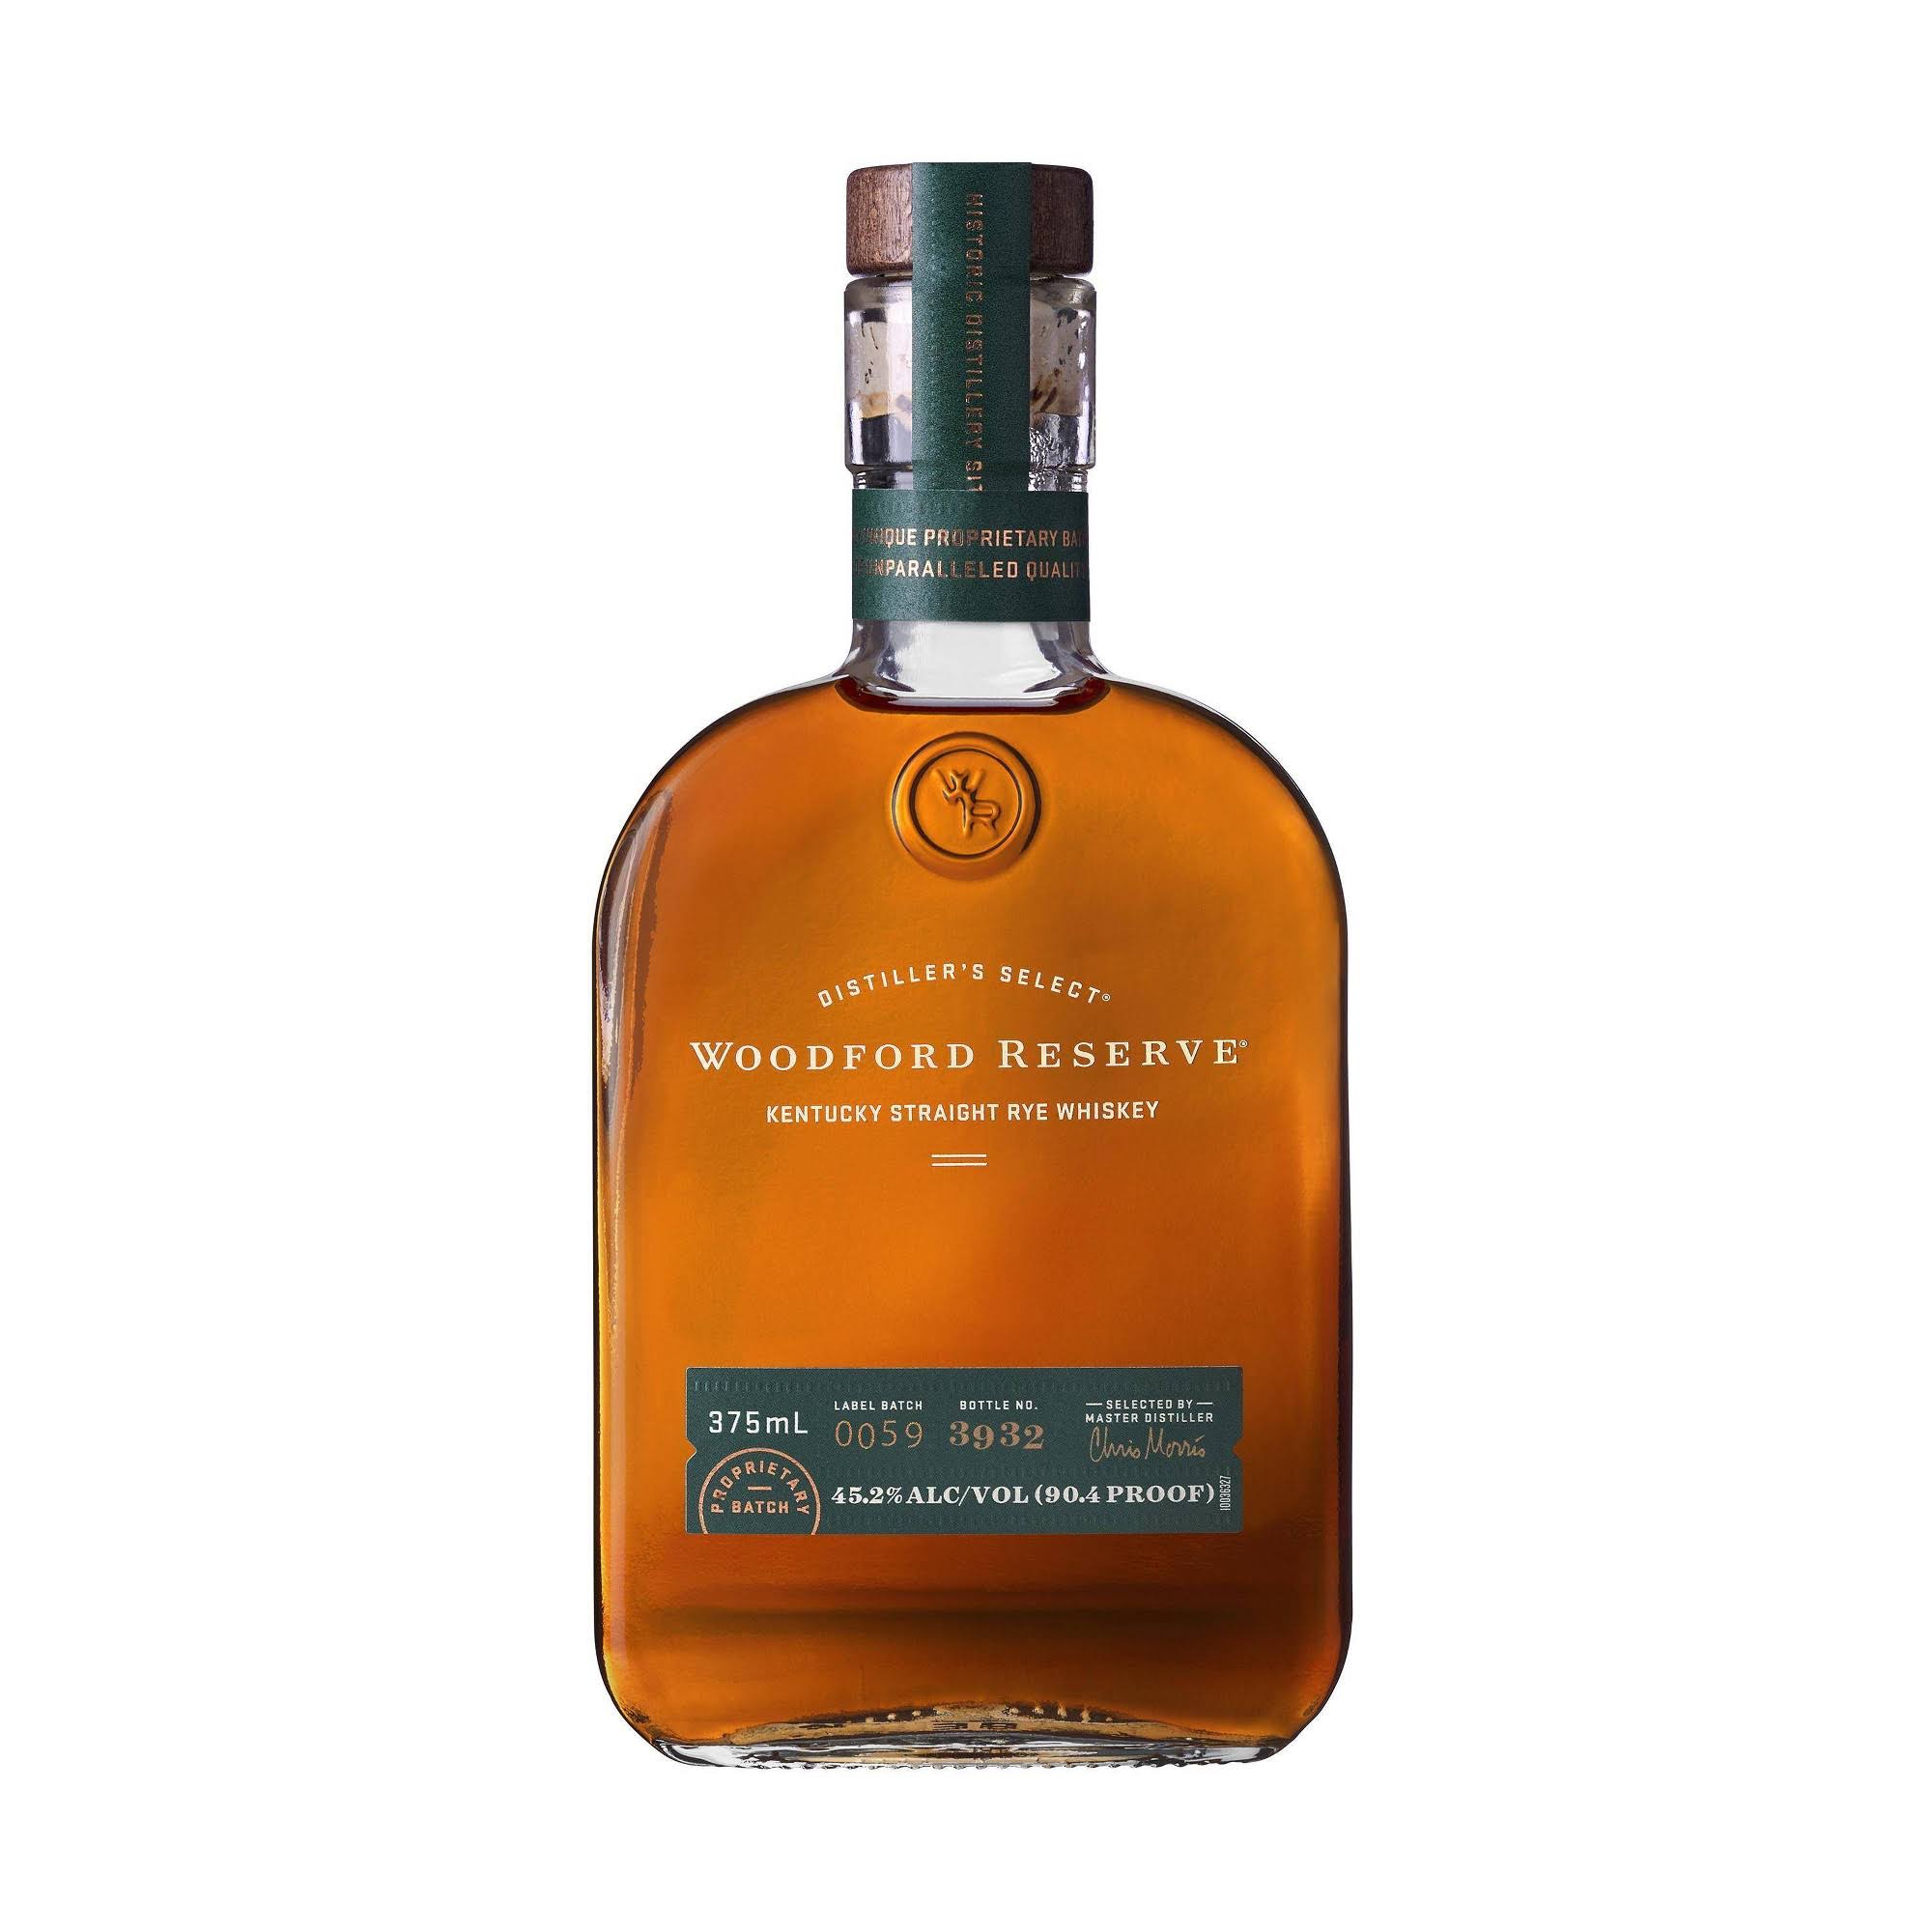 Woodford Reserve Straight Rye Whiskey, Kentucky Straight Rye Whiskey - 375 ml